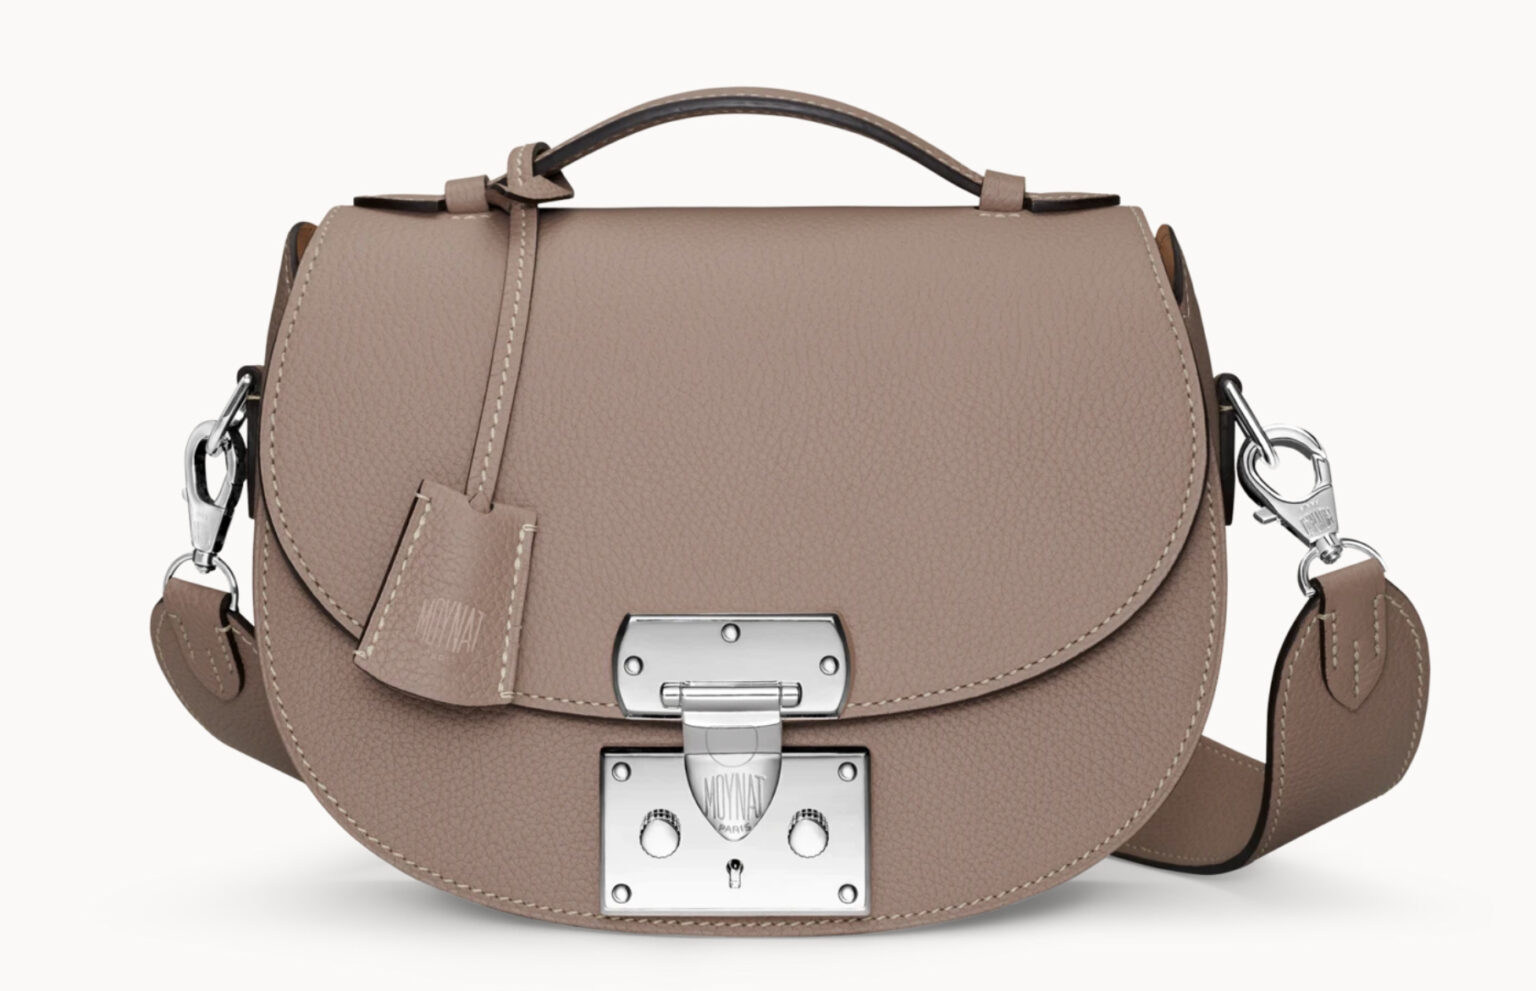 New Handbags from Moynat by Creative Director Nicholas Knightly